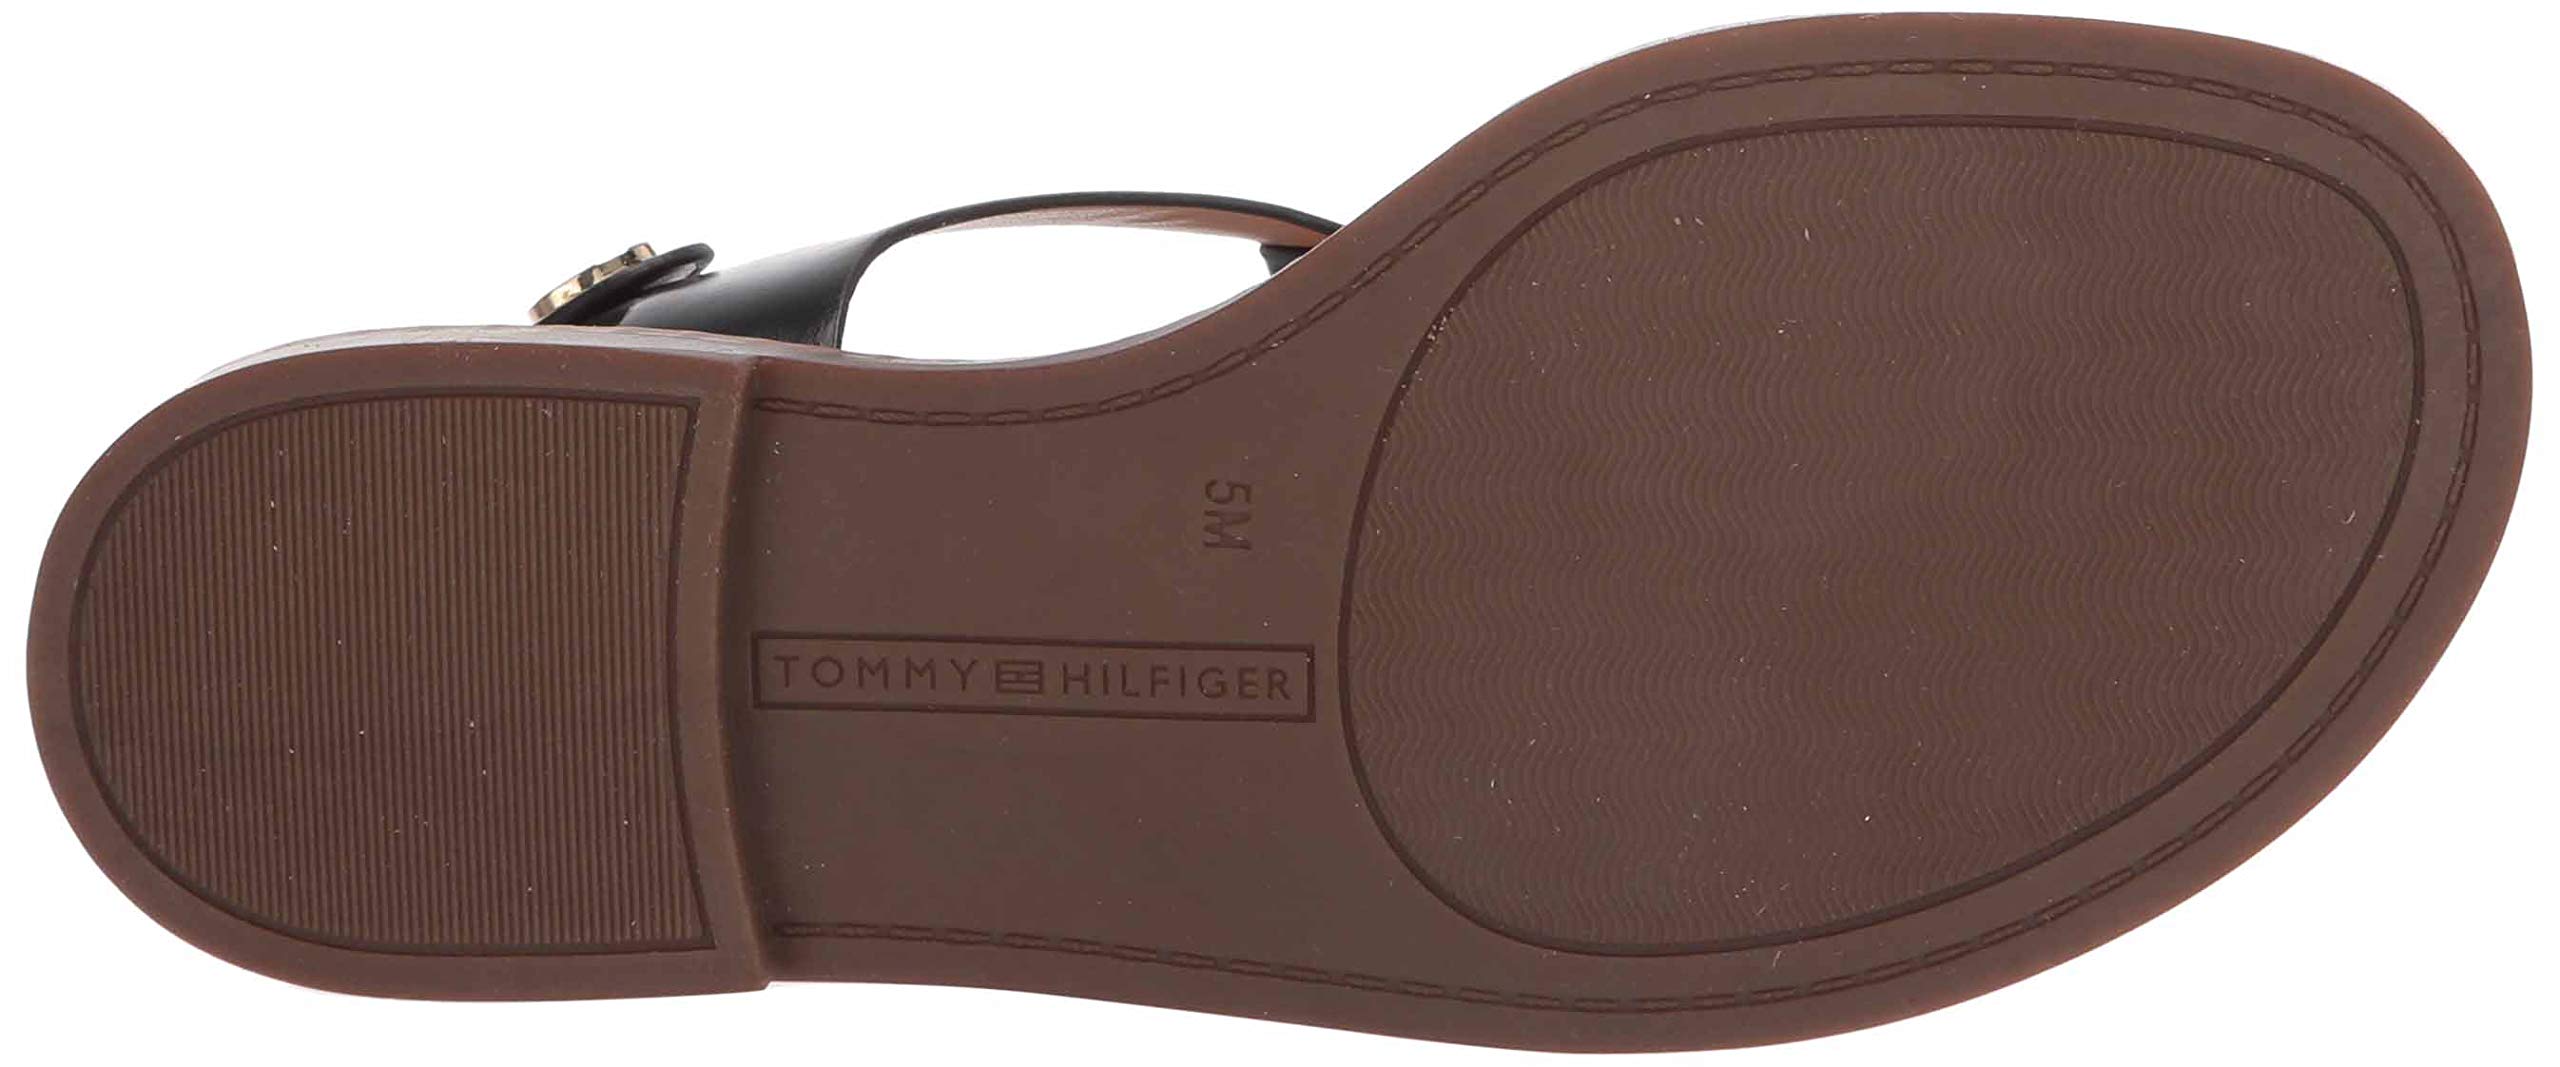 Tommy Hilfiger Women's Bennia Flat Sandal